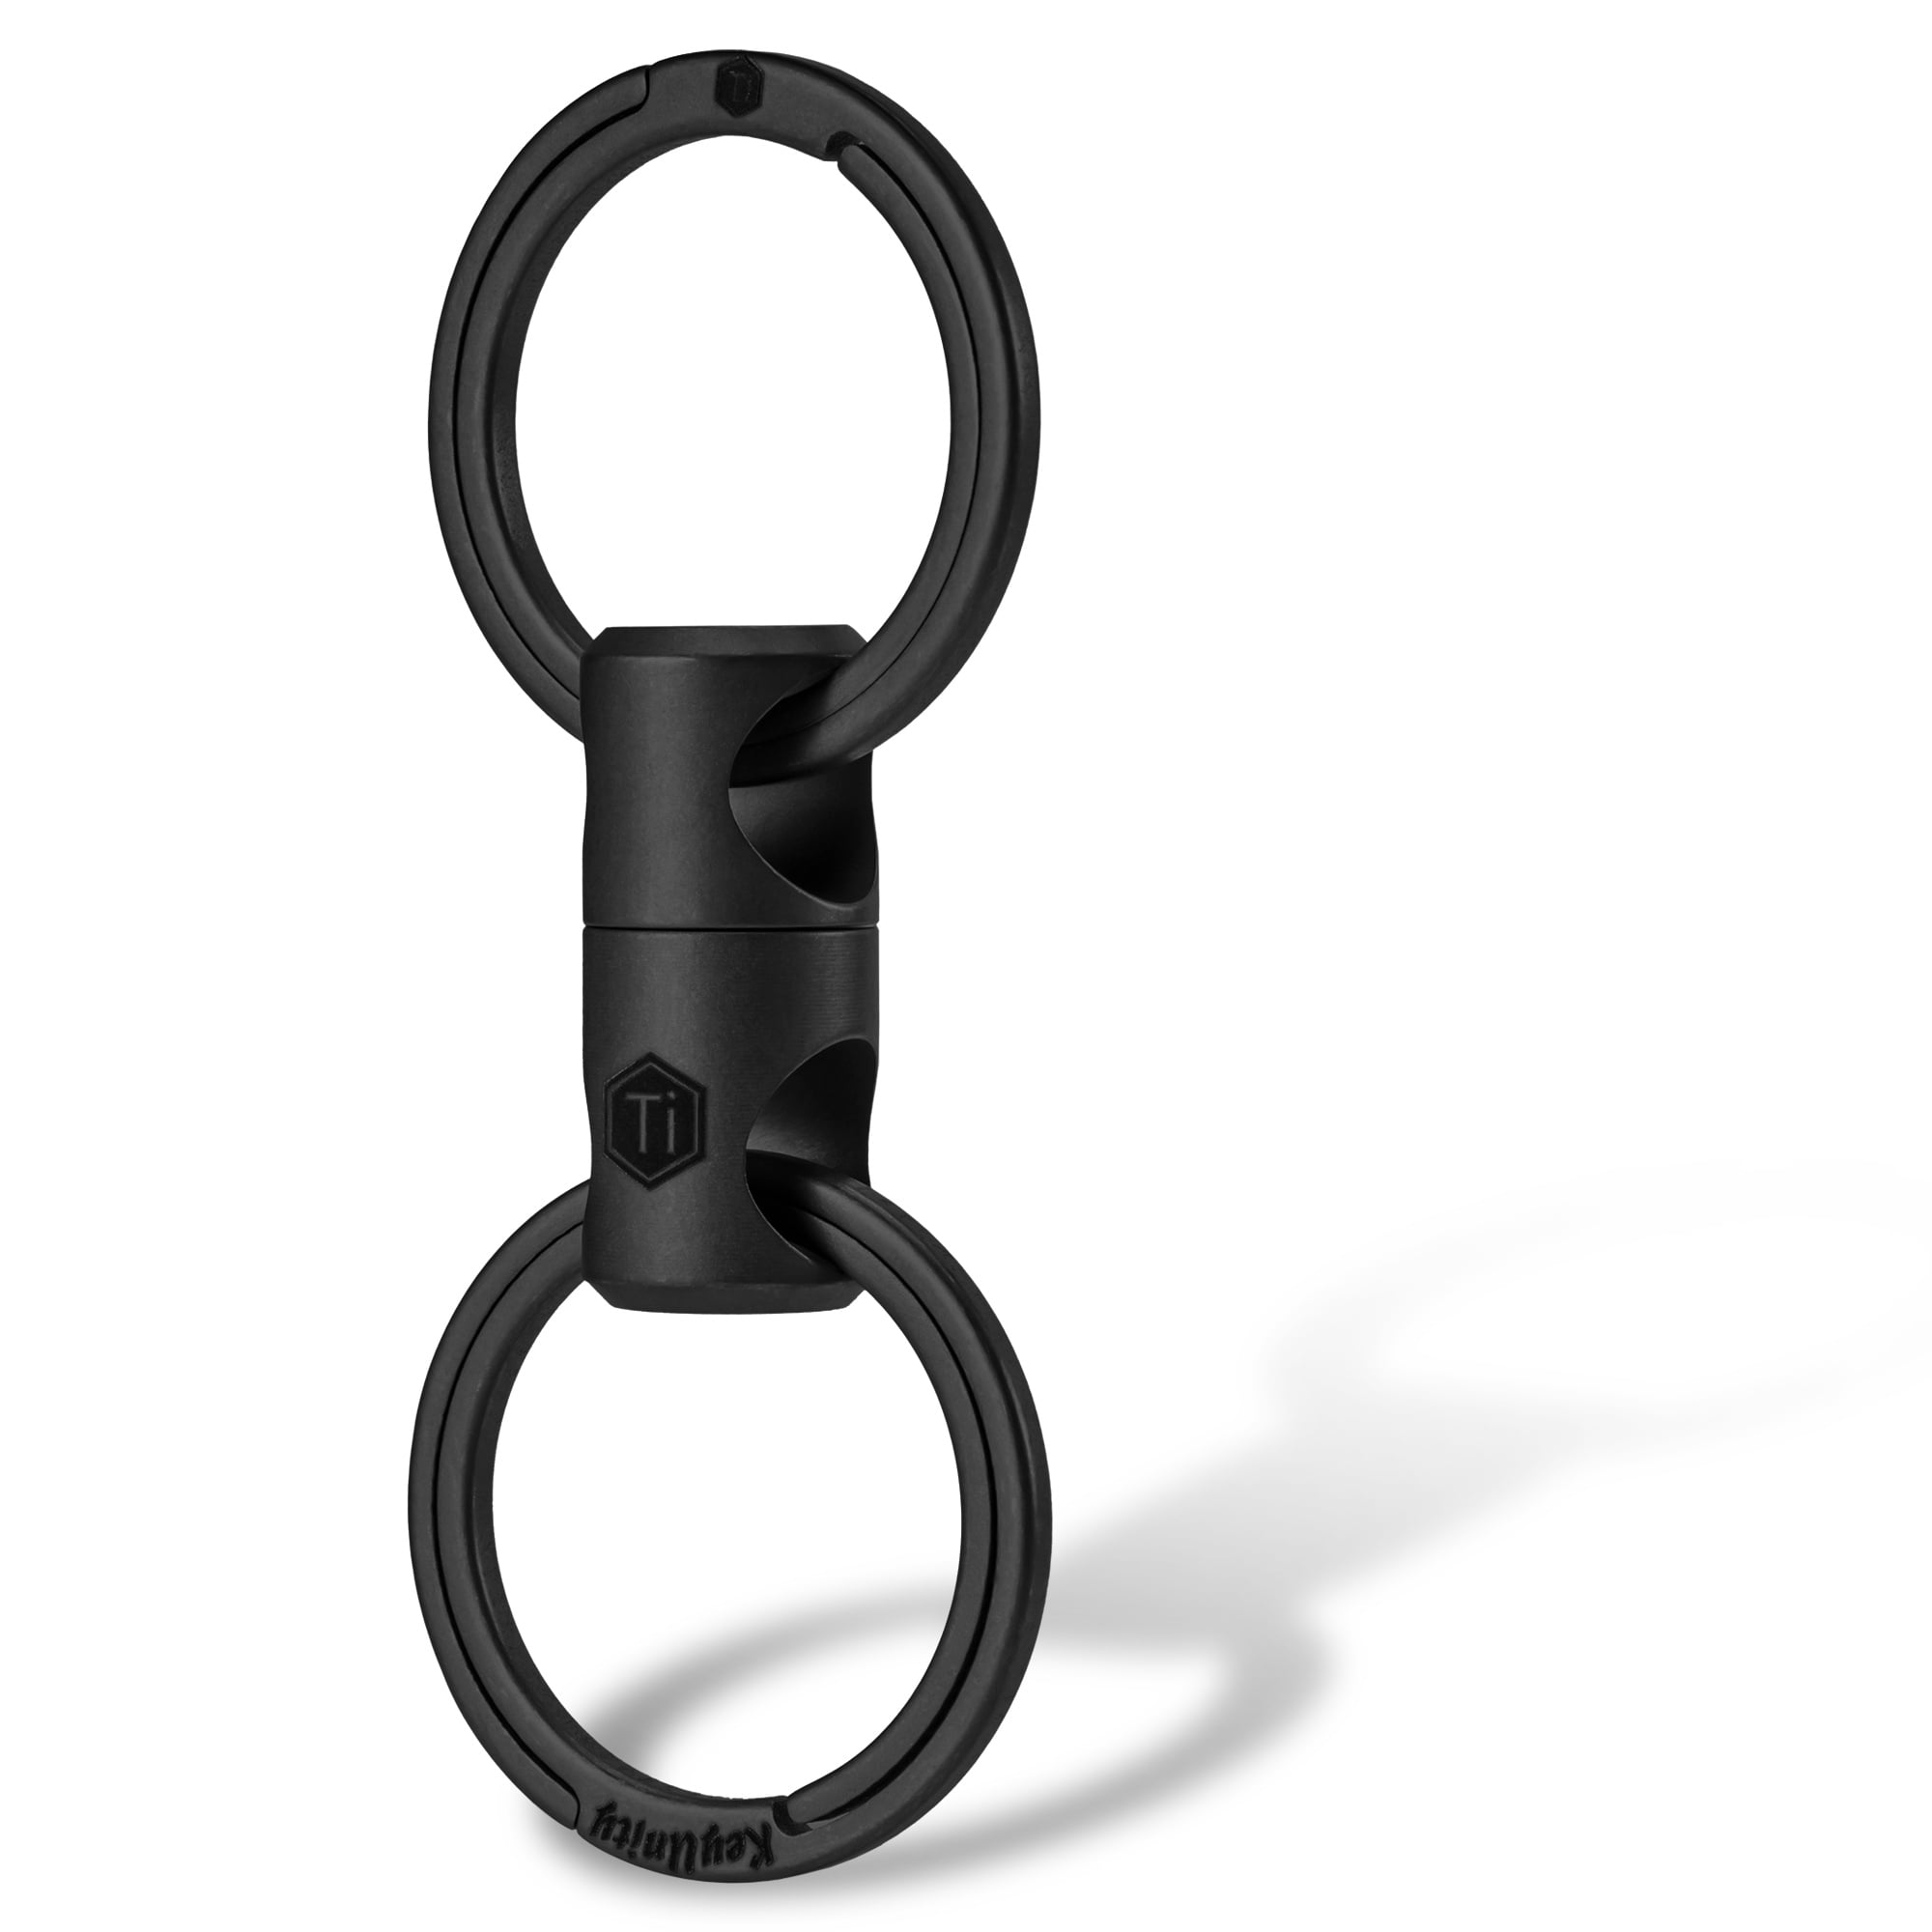 KeyUnity Titanium Swivel Key Chain Rings, Rotatable Key Organizer Linker  for Carabiner, Wind Chime, Plant, DIY Accessory, KA15 Black 